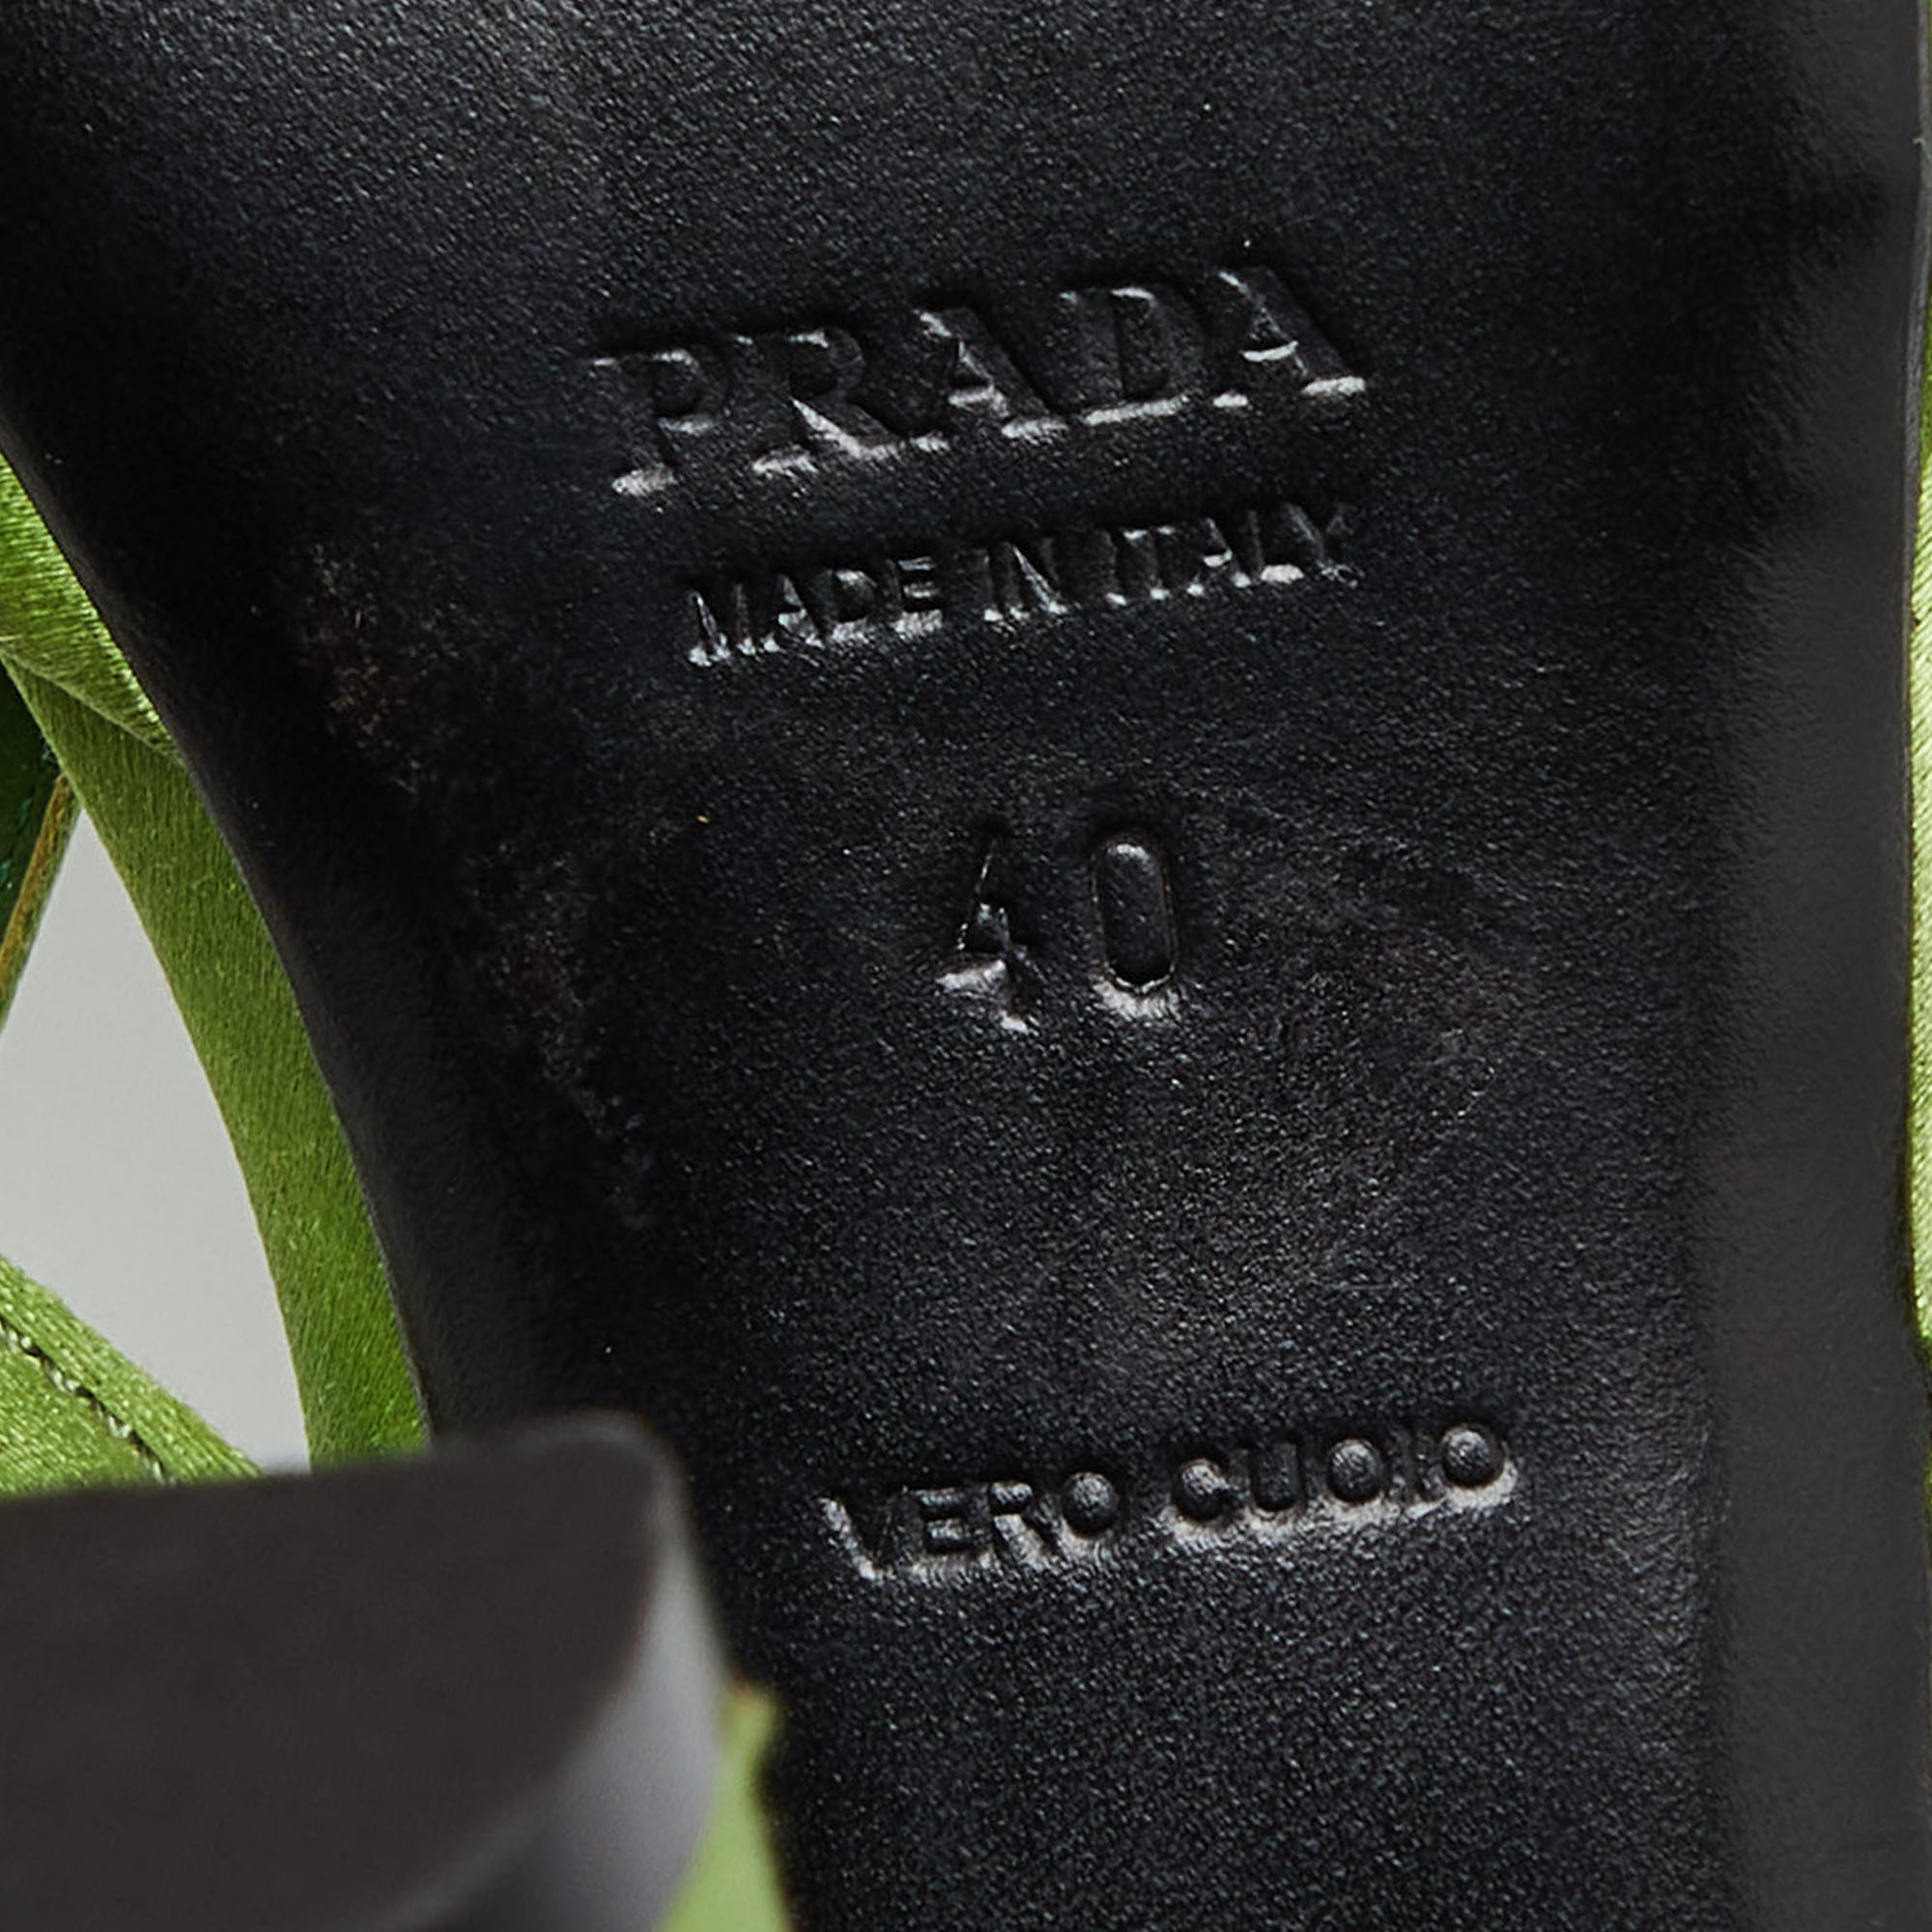 Prada Green Satin Strappy Open Toe Platform Slingback Sandals Size 40